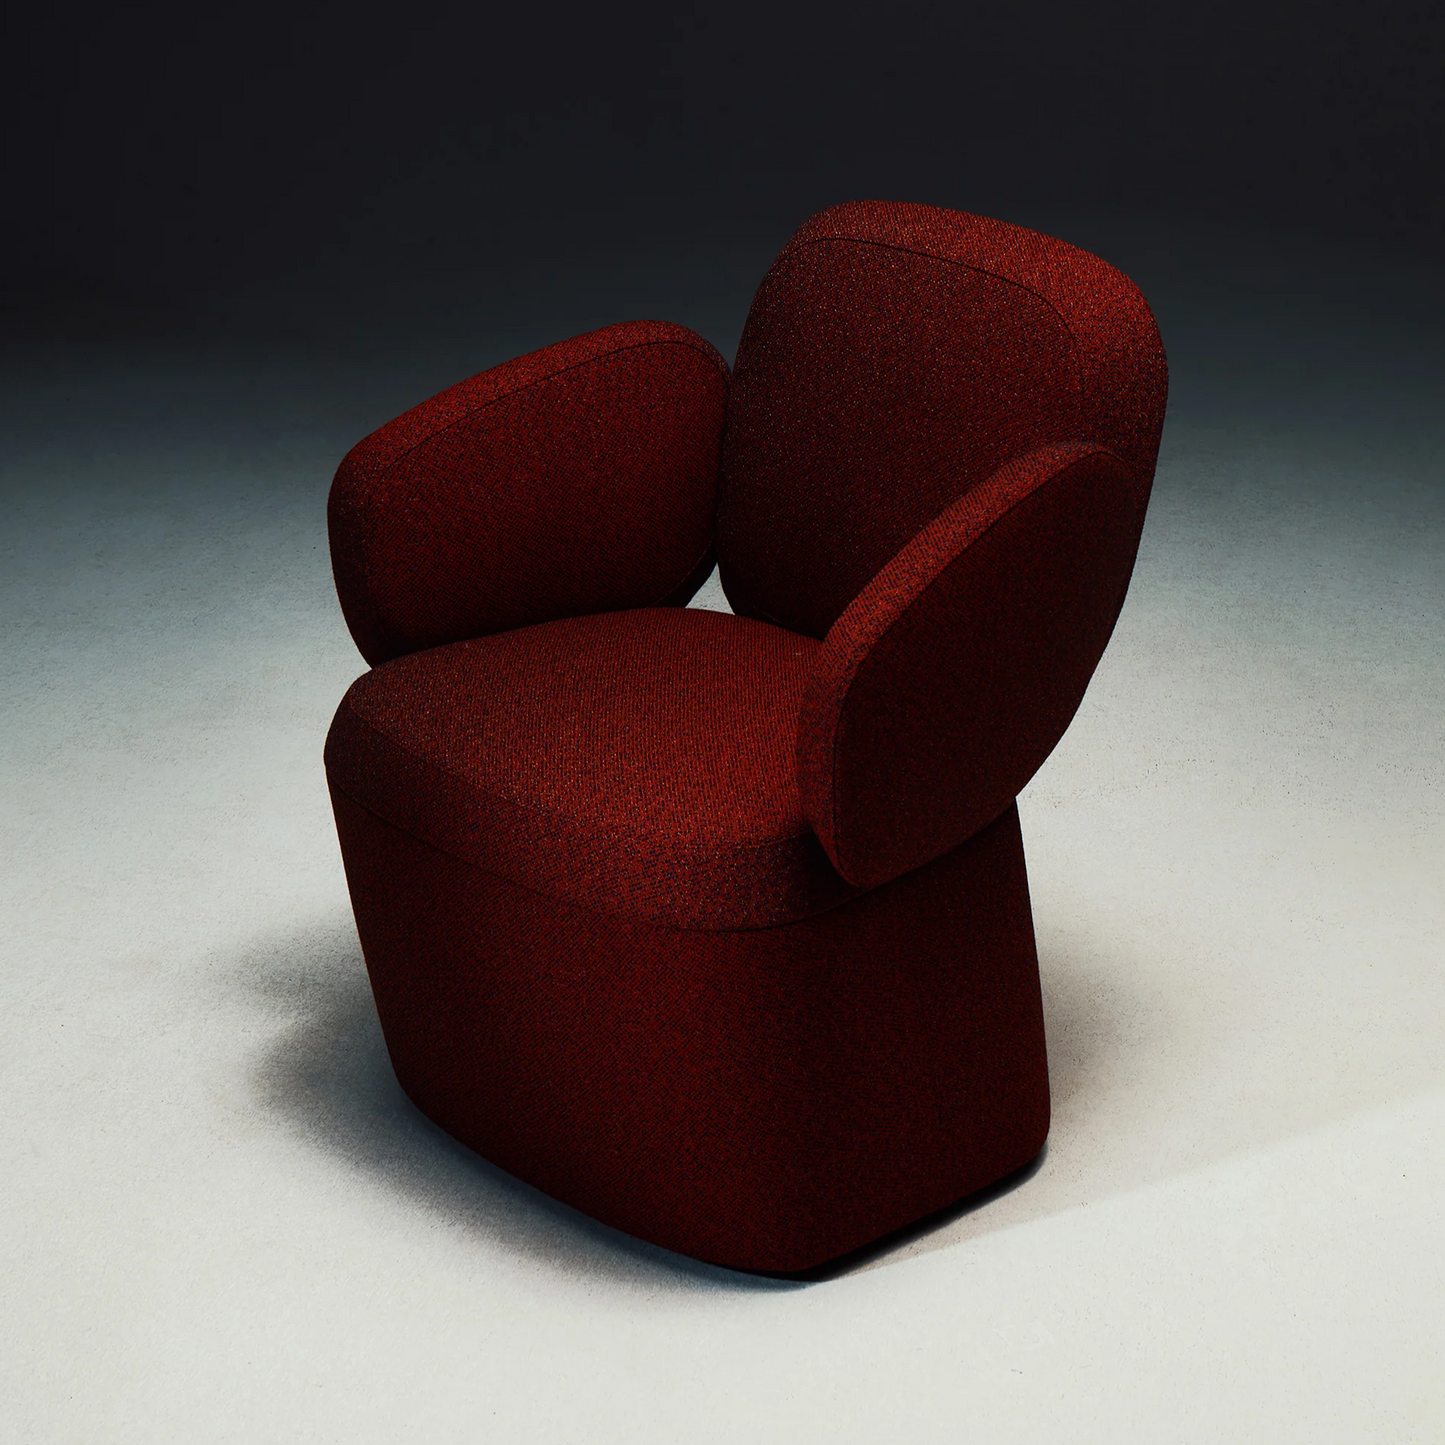 Sassi Chair